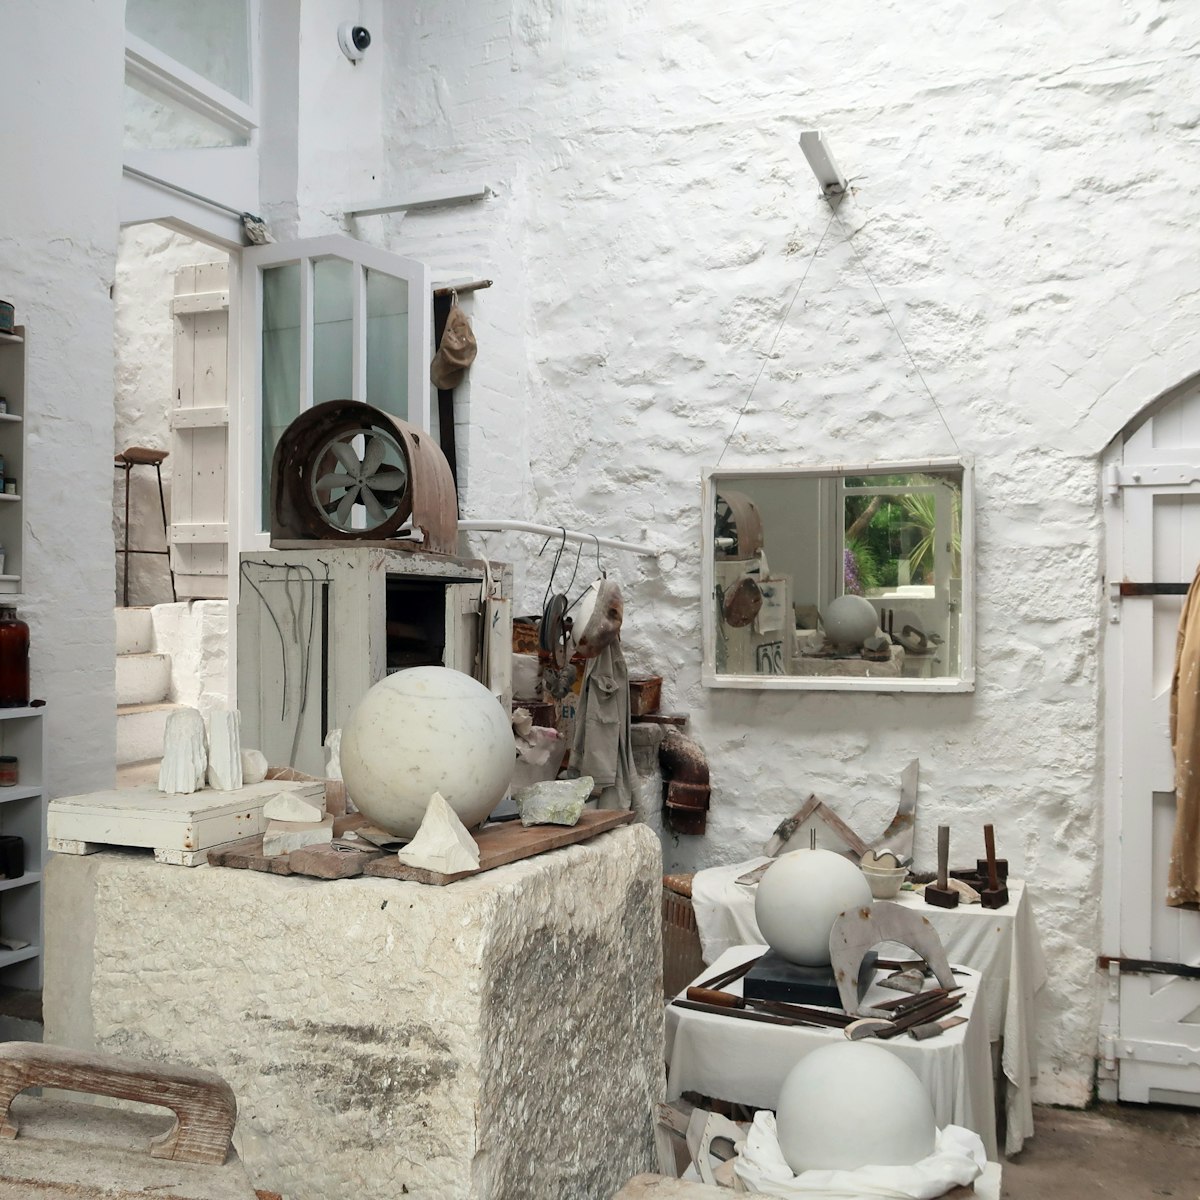 St Ives, UK - July 2019: Barbara Hepworth Museum and Sculpture Garden